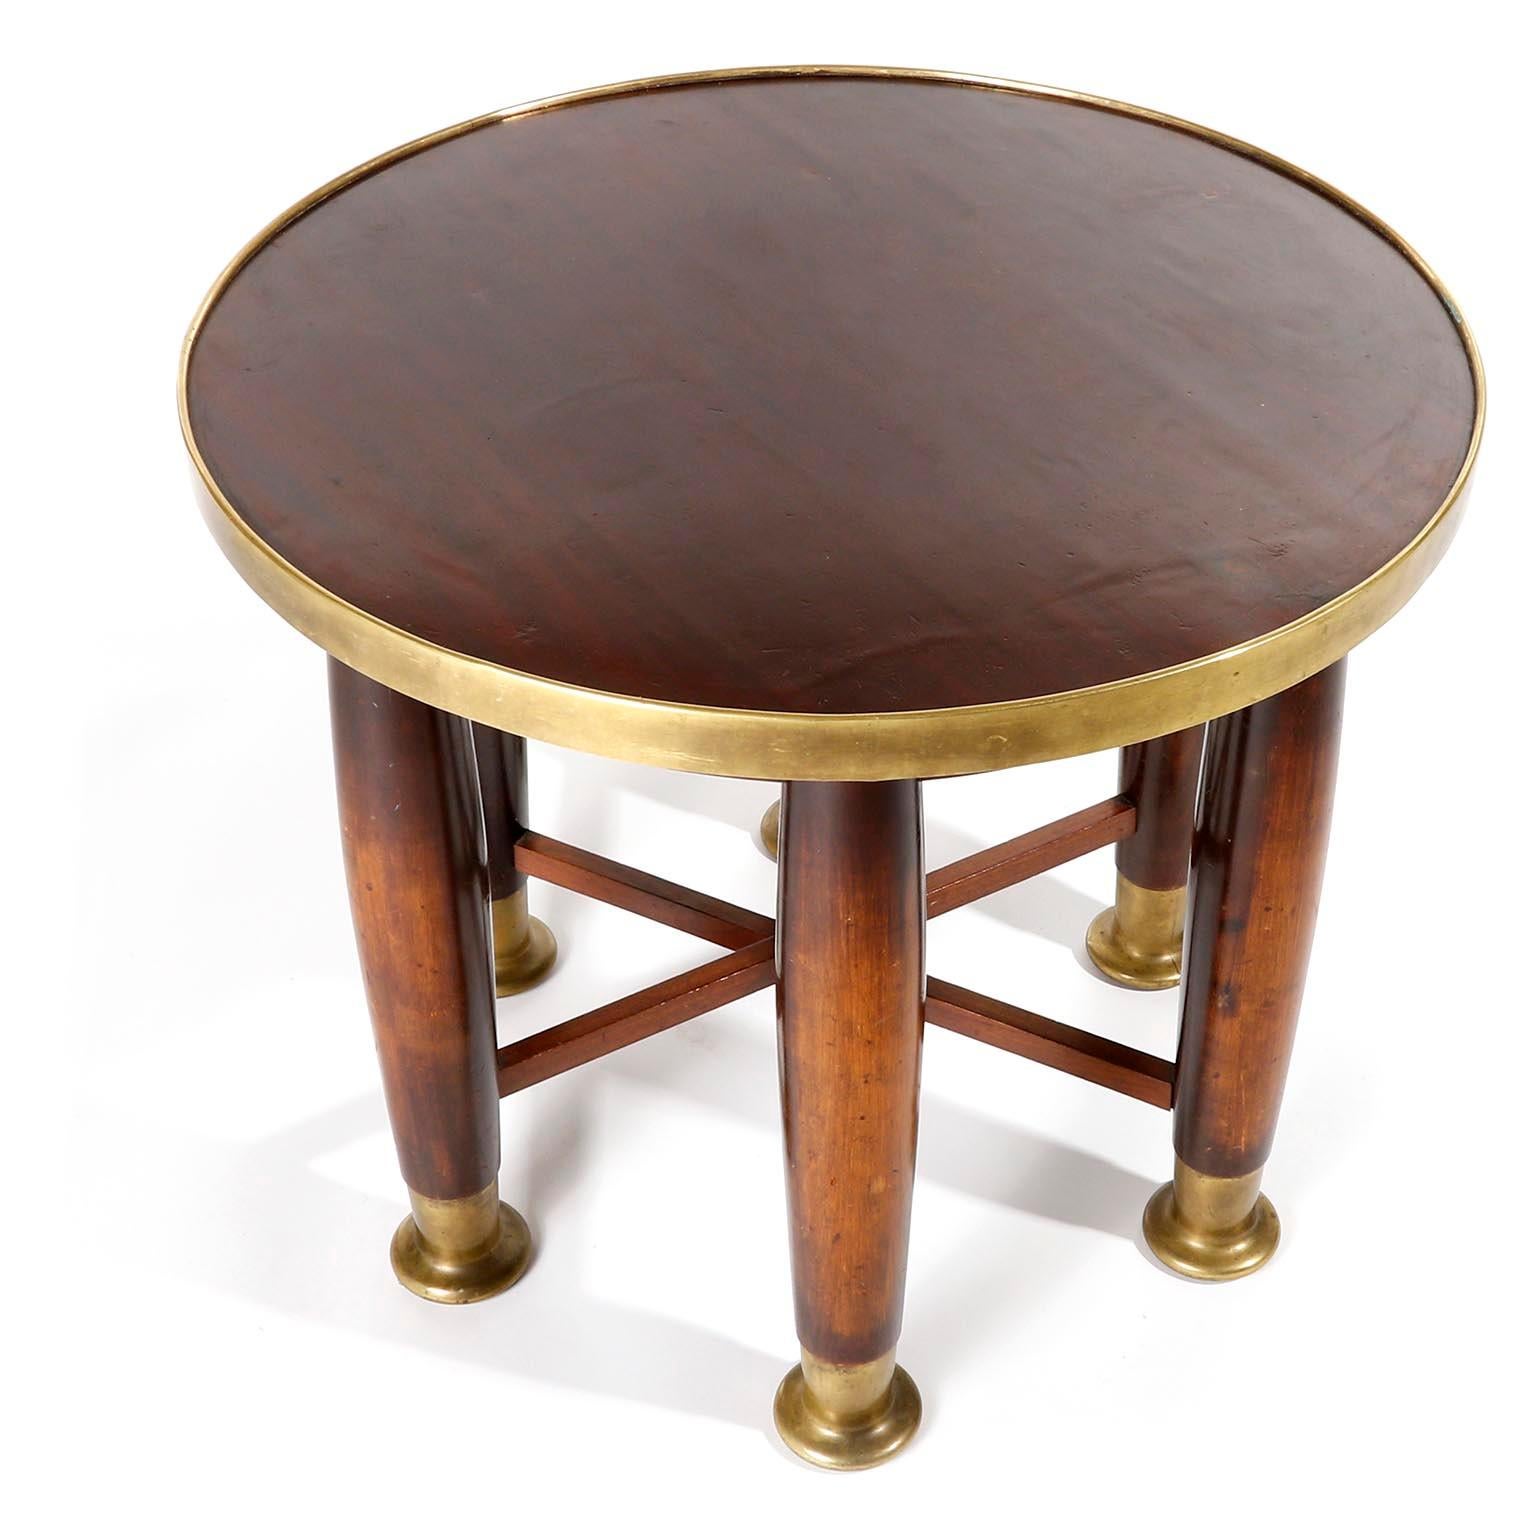 Polished Adolf Loos Six-Legged 'Haberfeld' Table, F.O. Schmidt, Brass Wood, Austria, 1899 For Sale